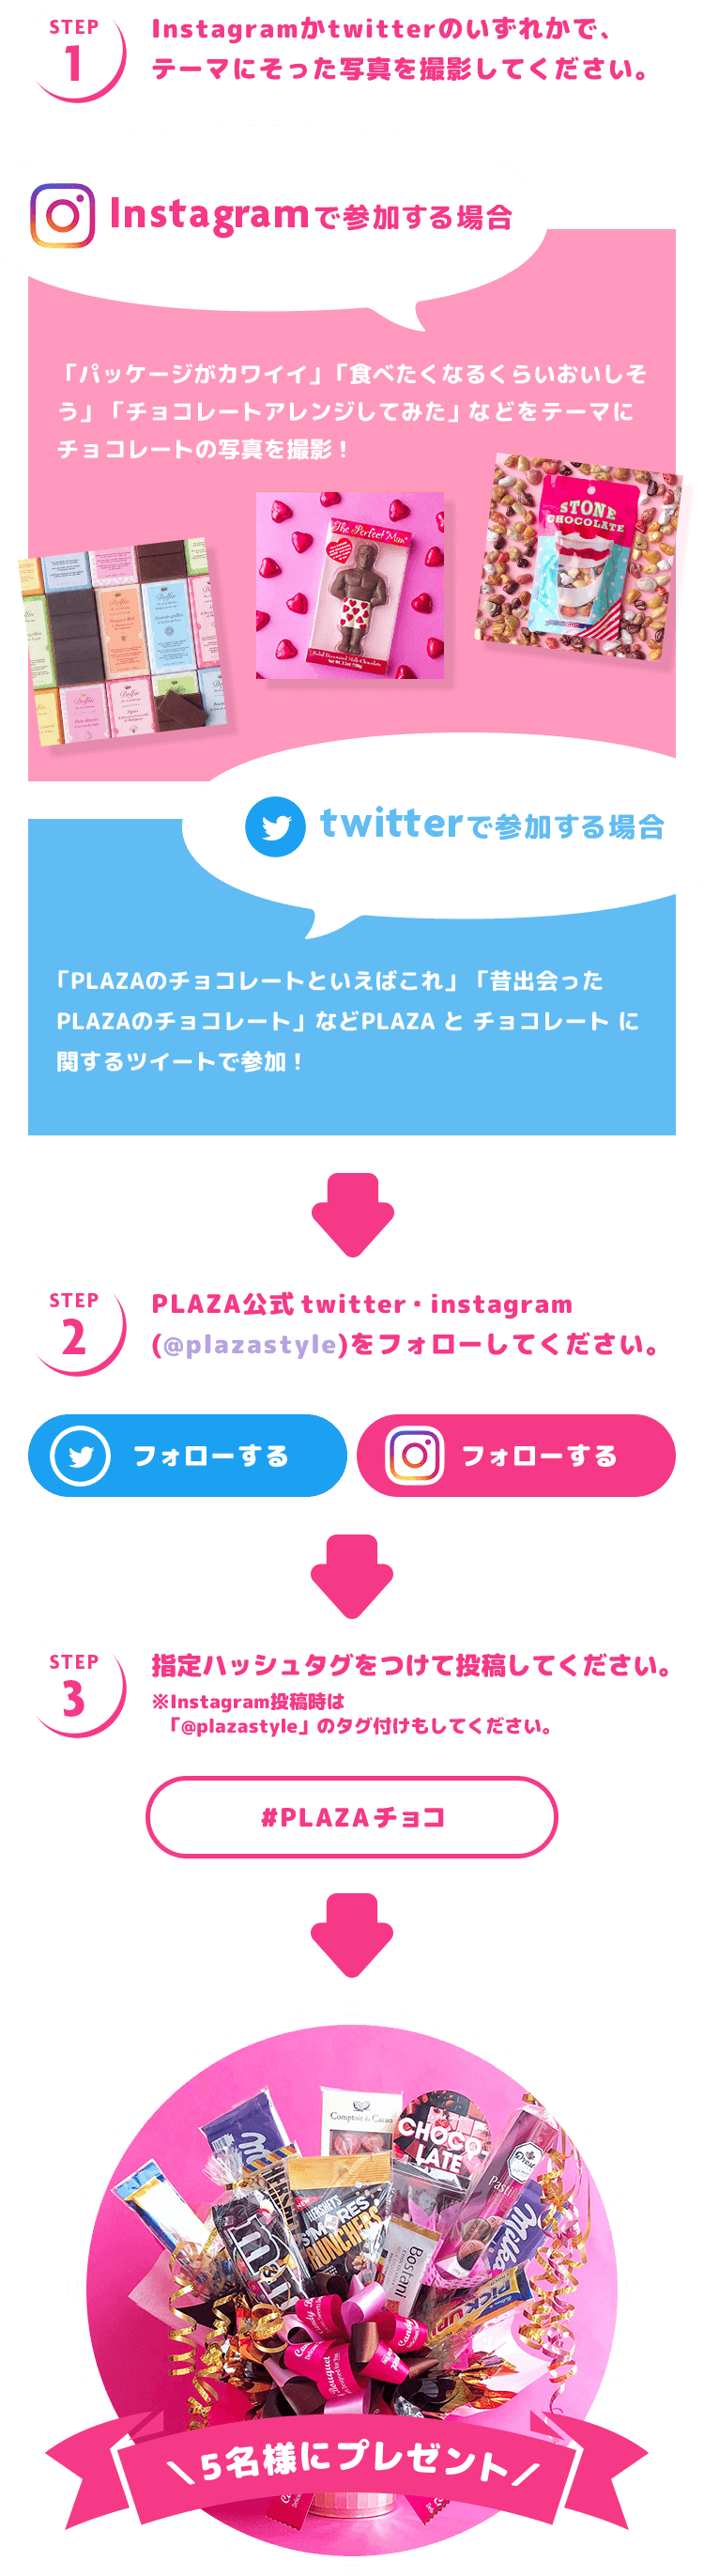 Step 1:Instagramかtwitterのいずれかで、 テーマにそった写真を撮影してください。- Step 2:PLAZA公式twitter・instagram (@plazastyle)をフォローしてください。 - Step 3:PLAZA公式twitter・instagram (@plazastyle)をフォローしてください。